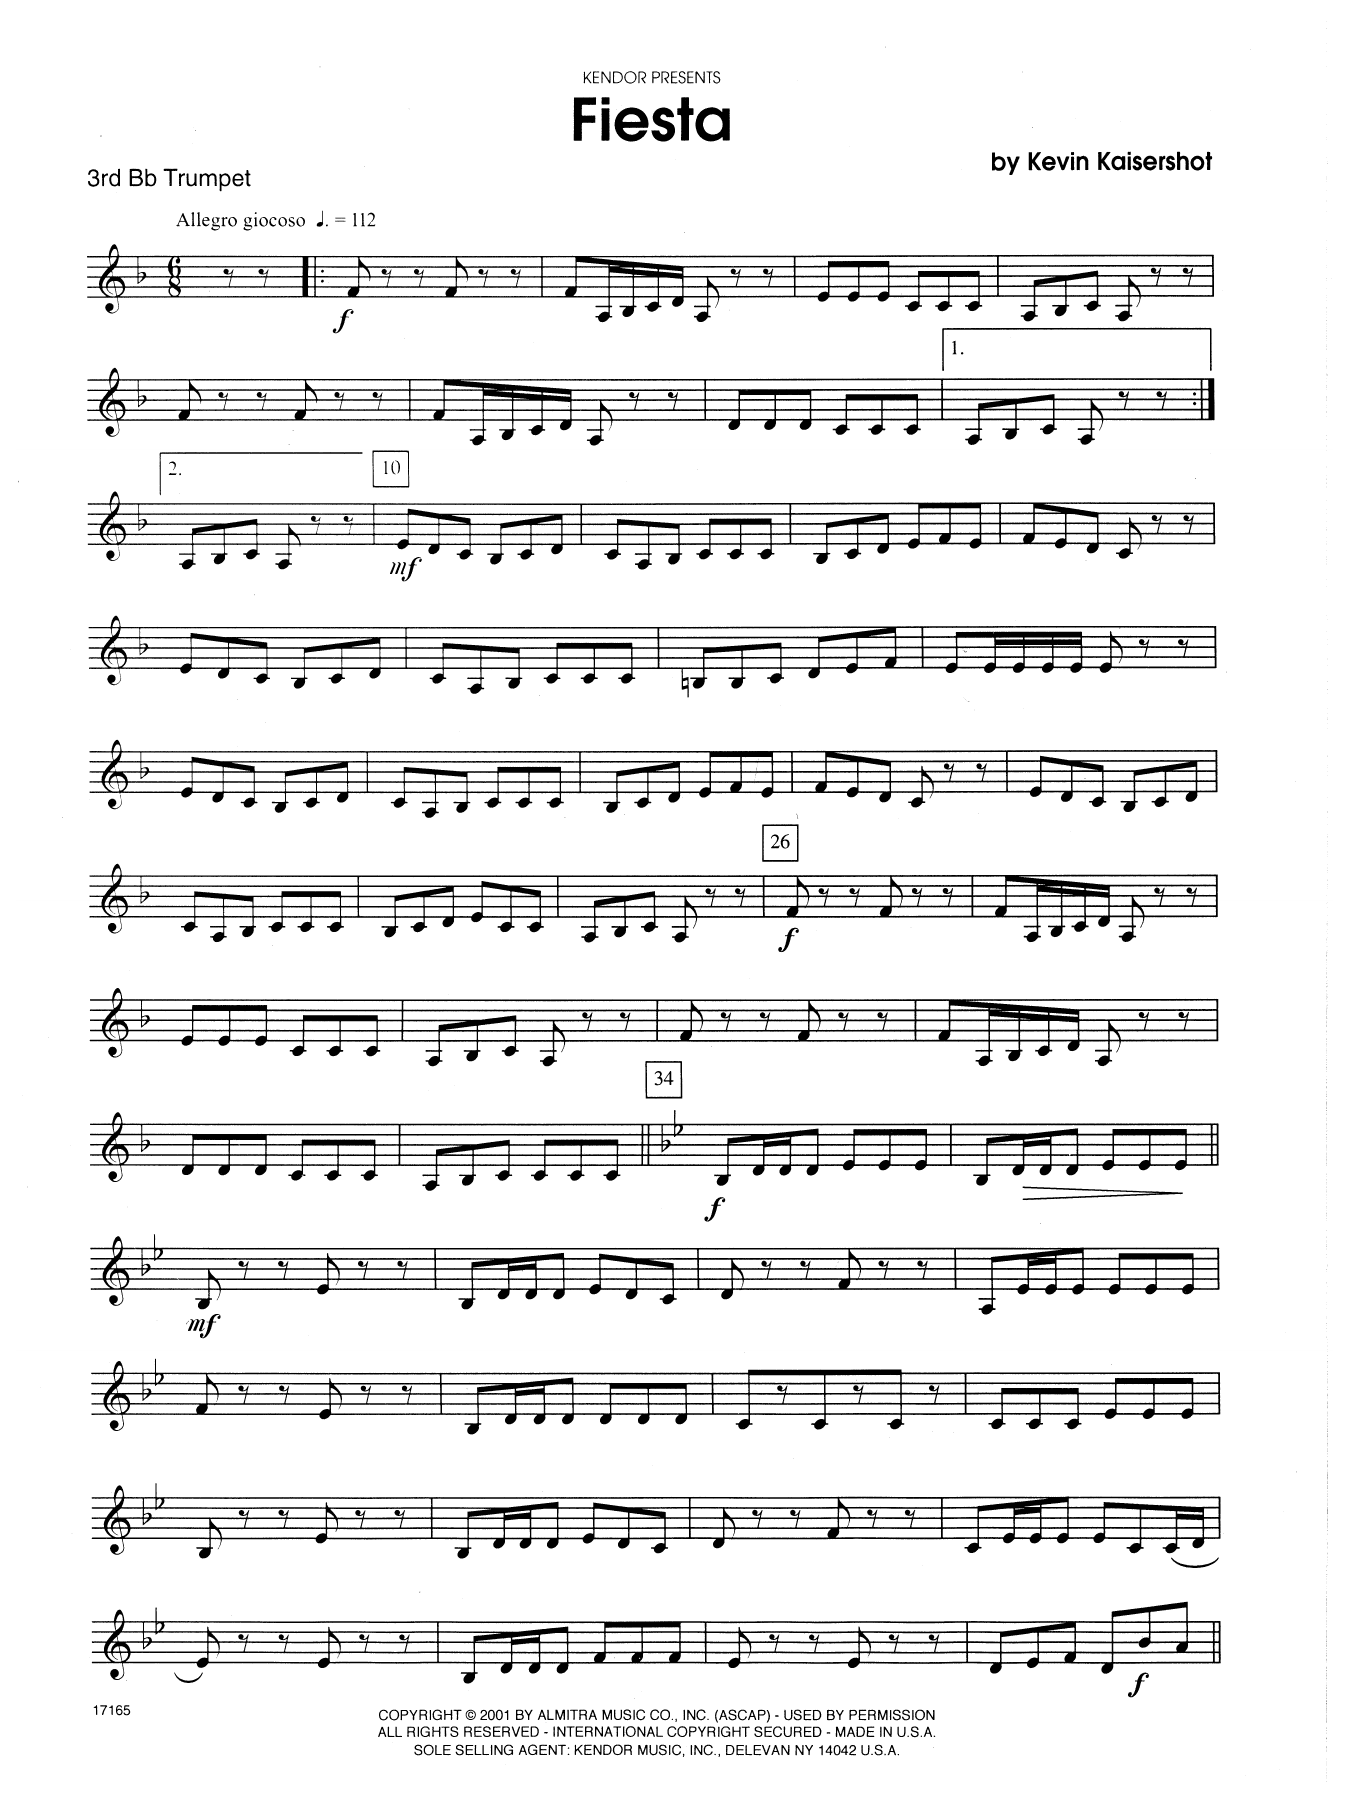 Download Kevin Kaisershot Fiesta - 3rd Bb Trumpet Sheet Music